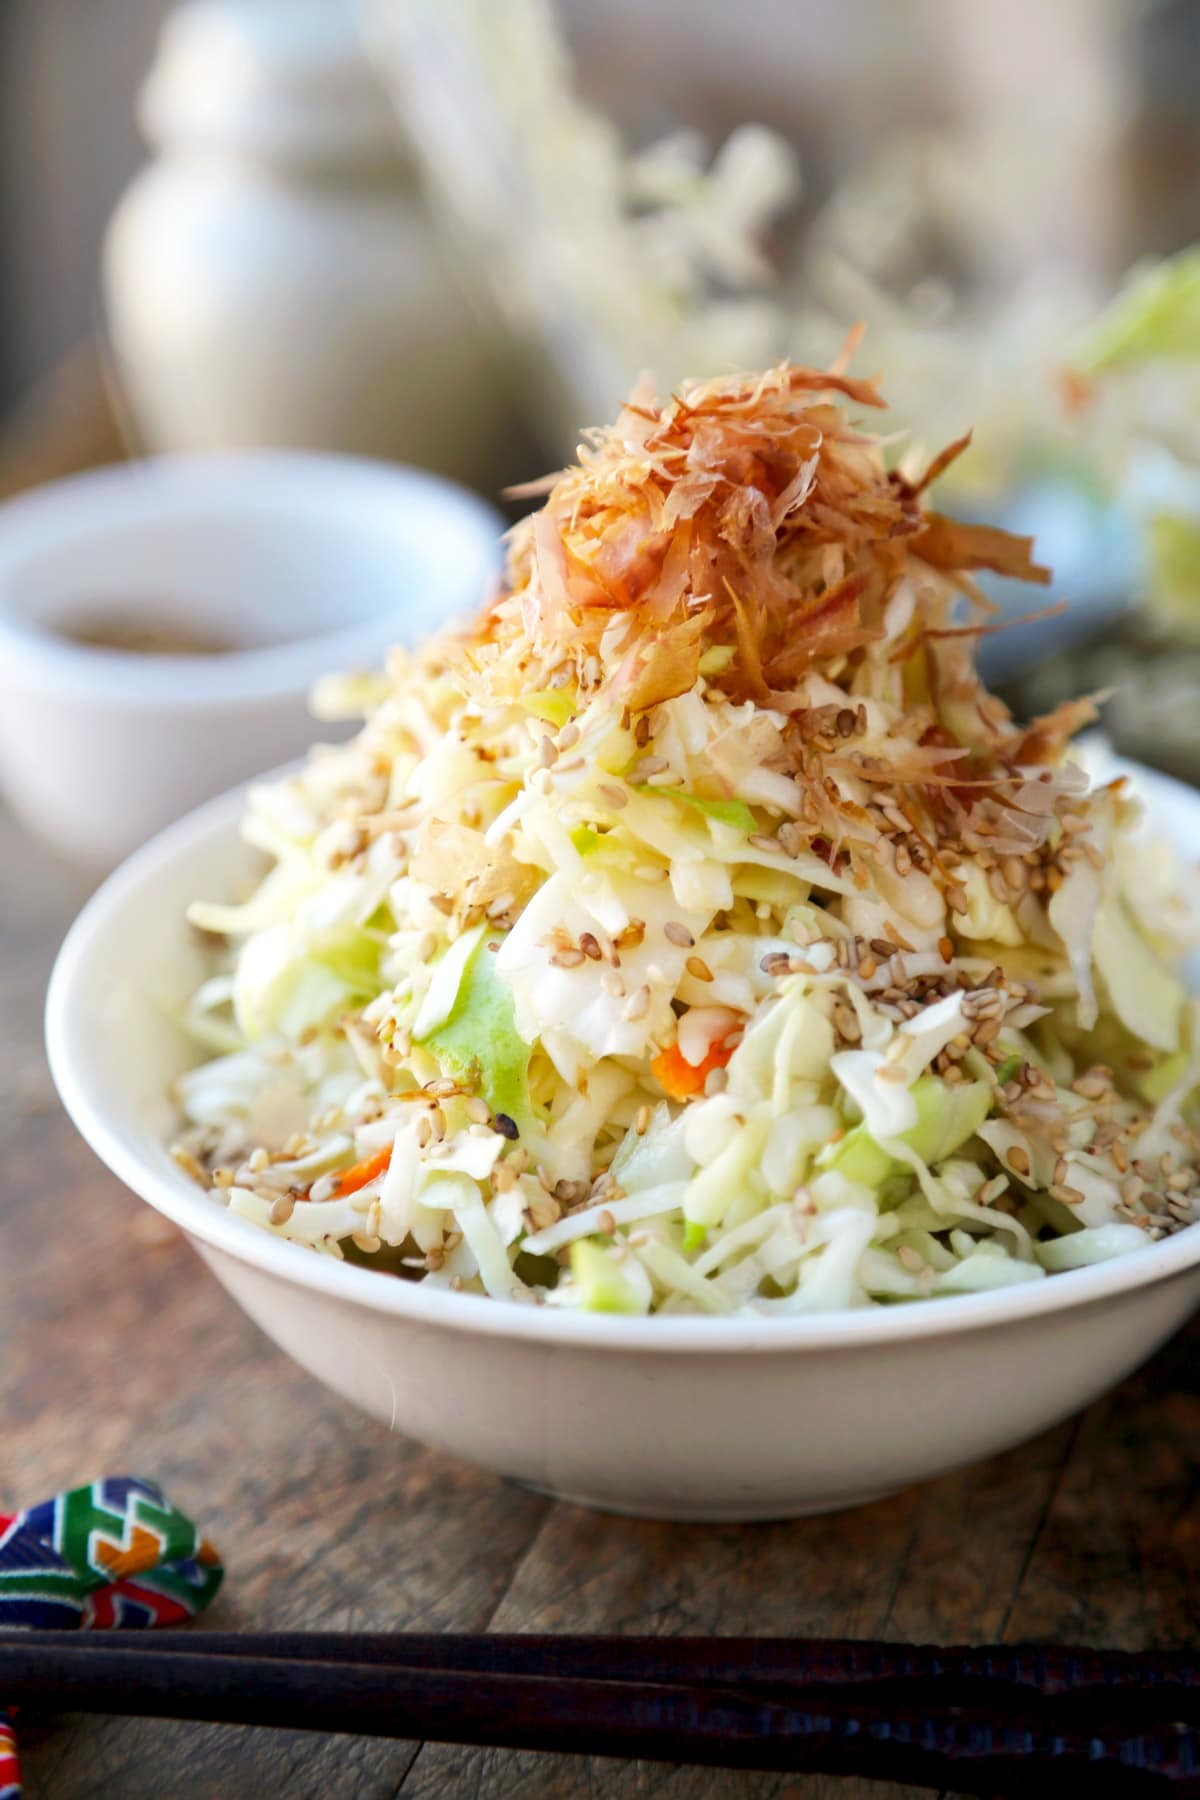 Japanese coleslaw - cabbage salad